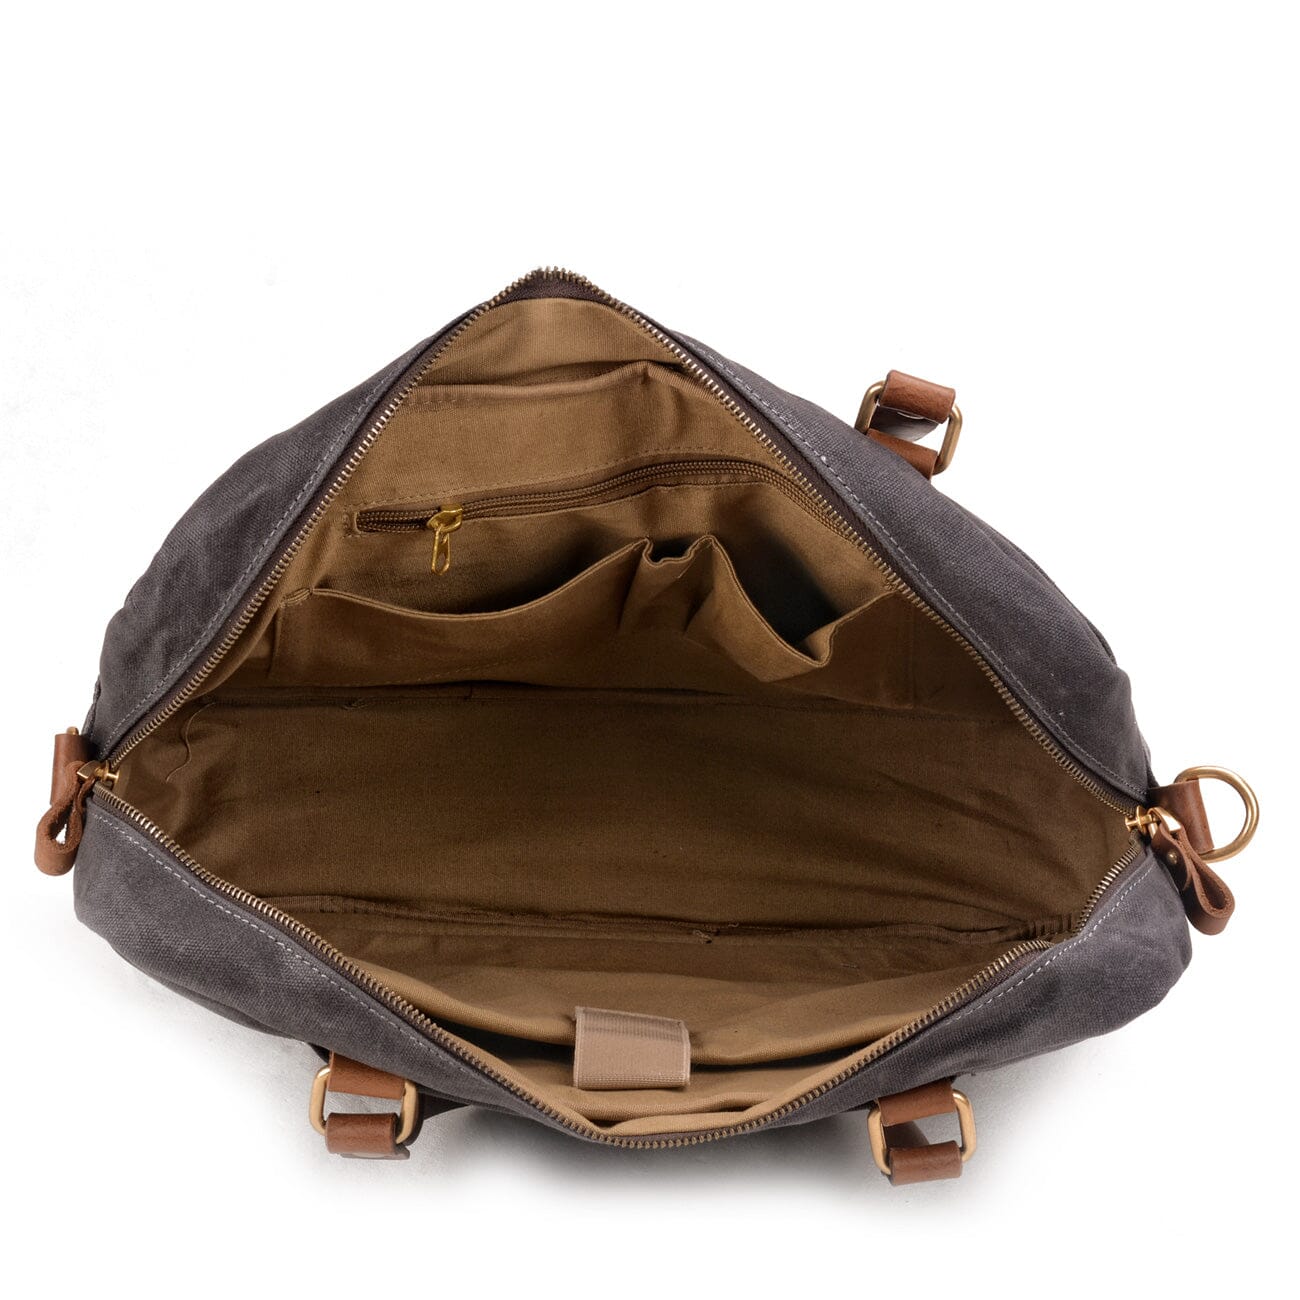 canvas laptop messenger bag interior spacious compartment laptop sleeve